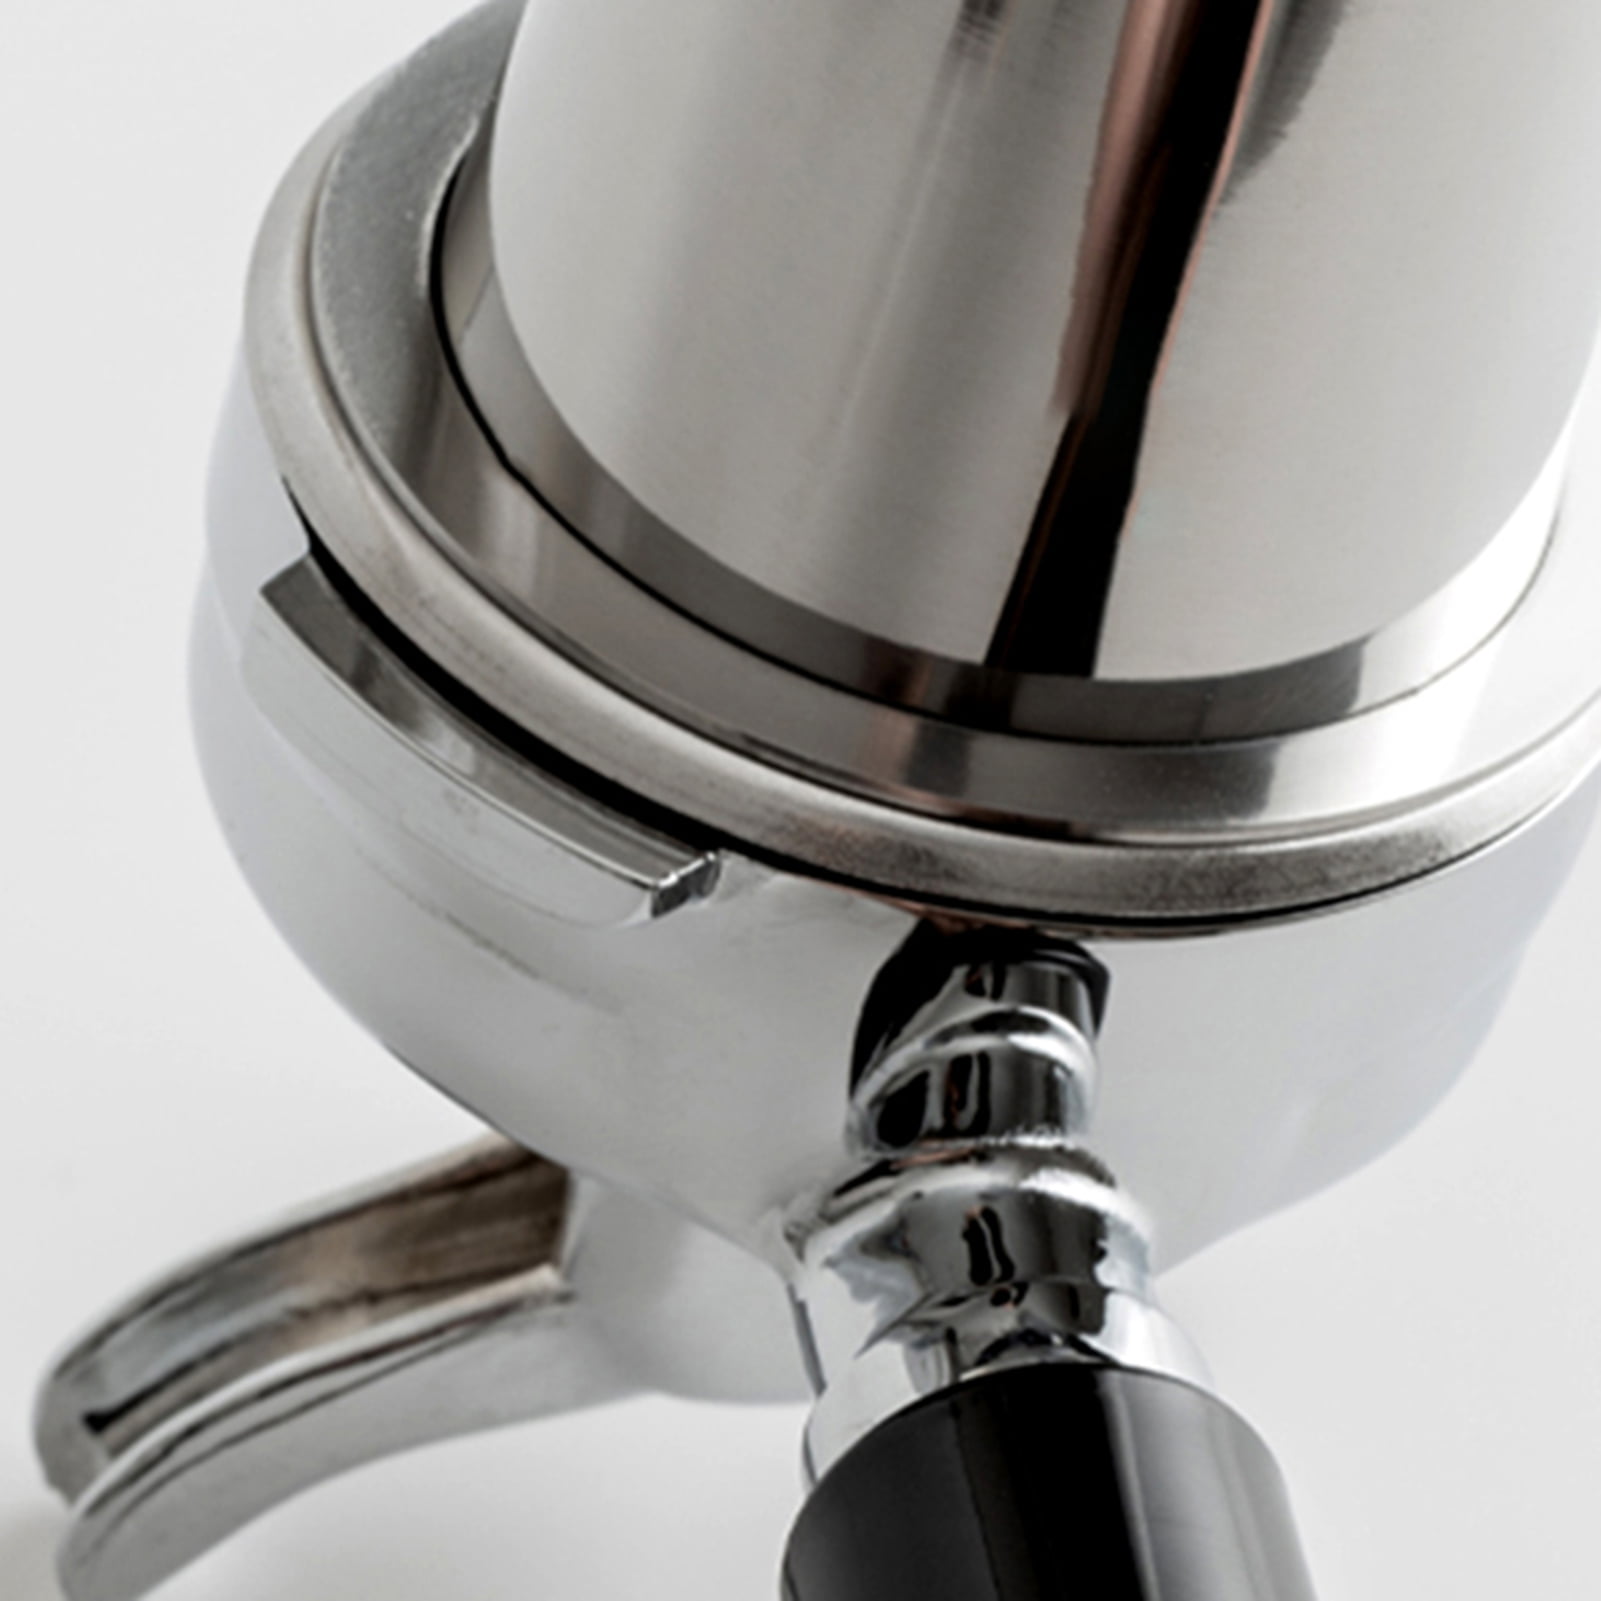 54mm Dosing Cup Espresso Coffee Machine Grinder Dosing Cup Fits